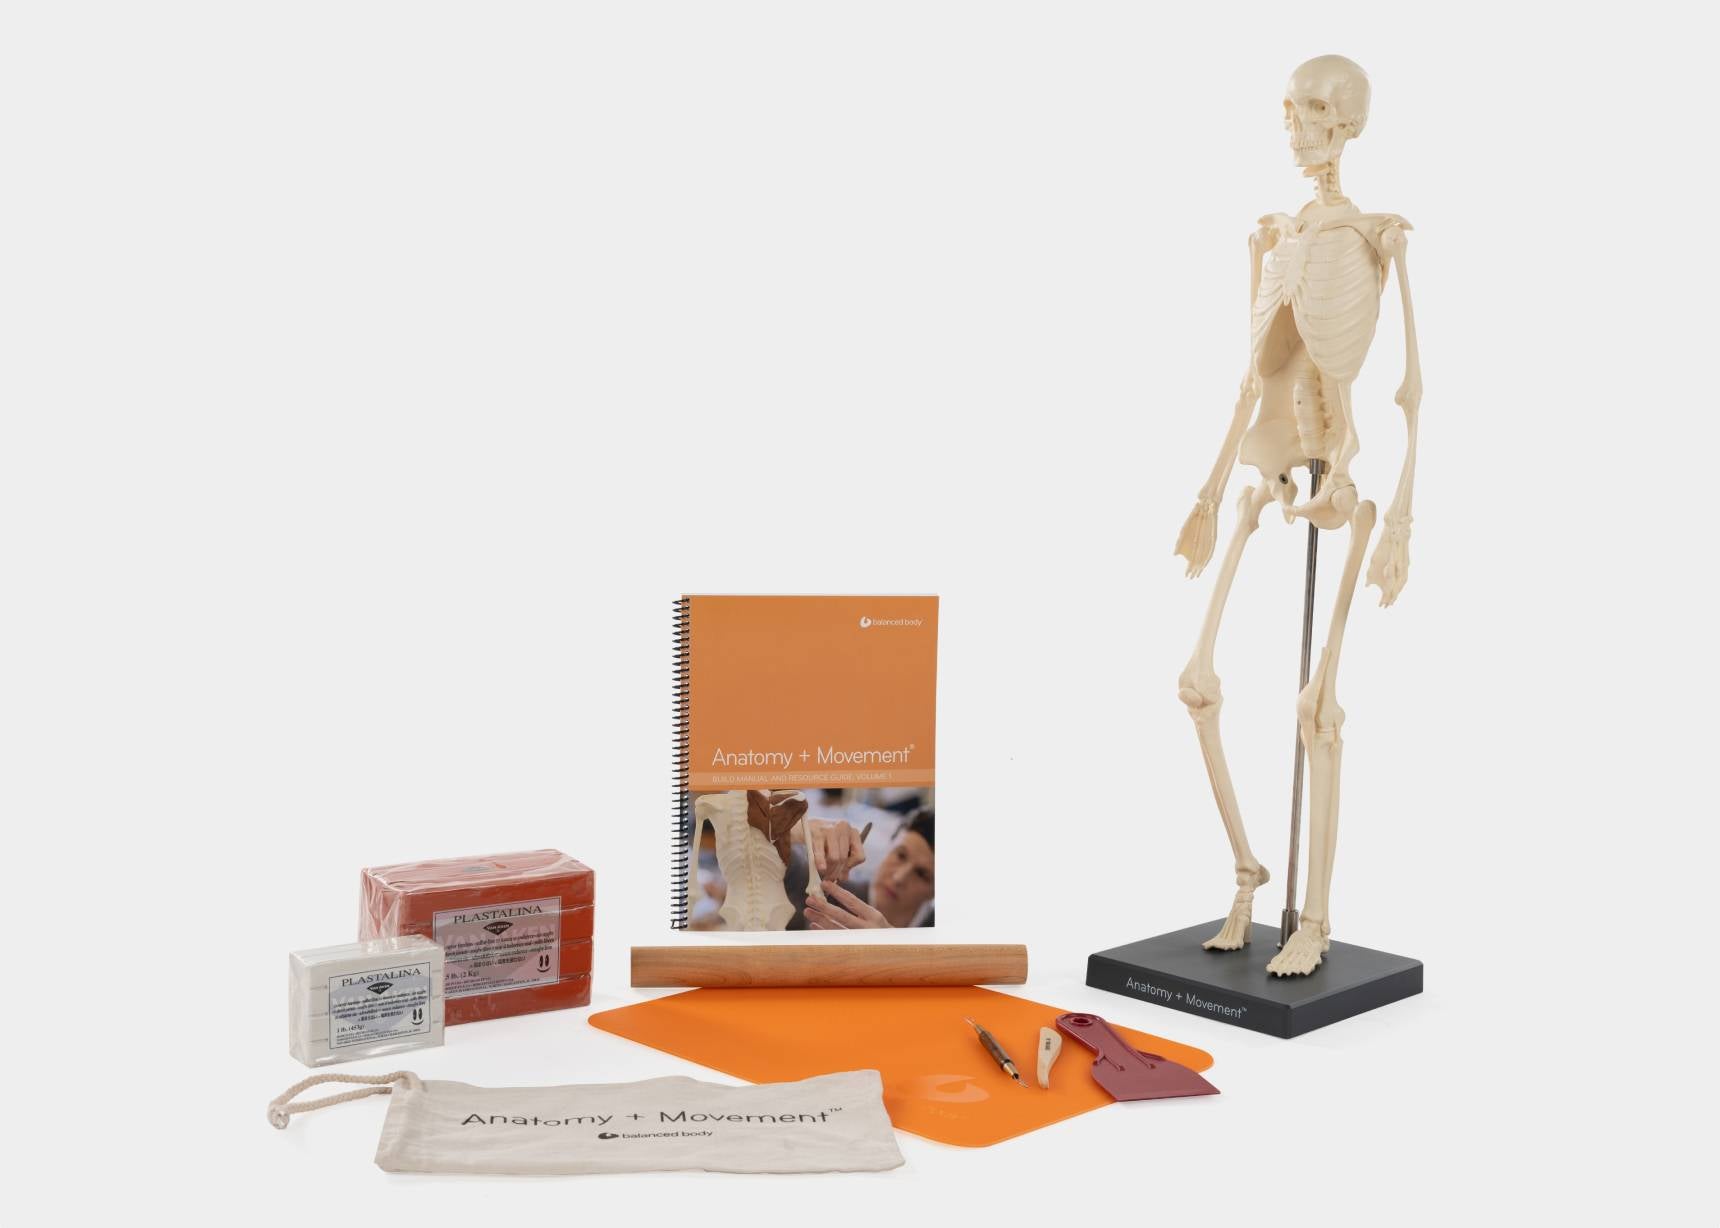 Anatomy Complete Build Kit for comprehensive anatomical studies.